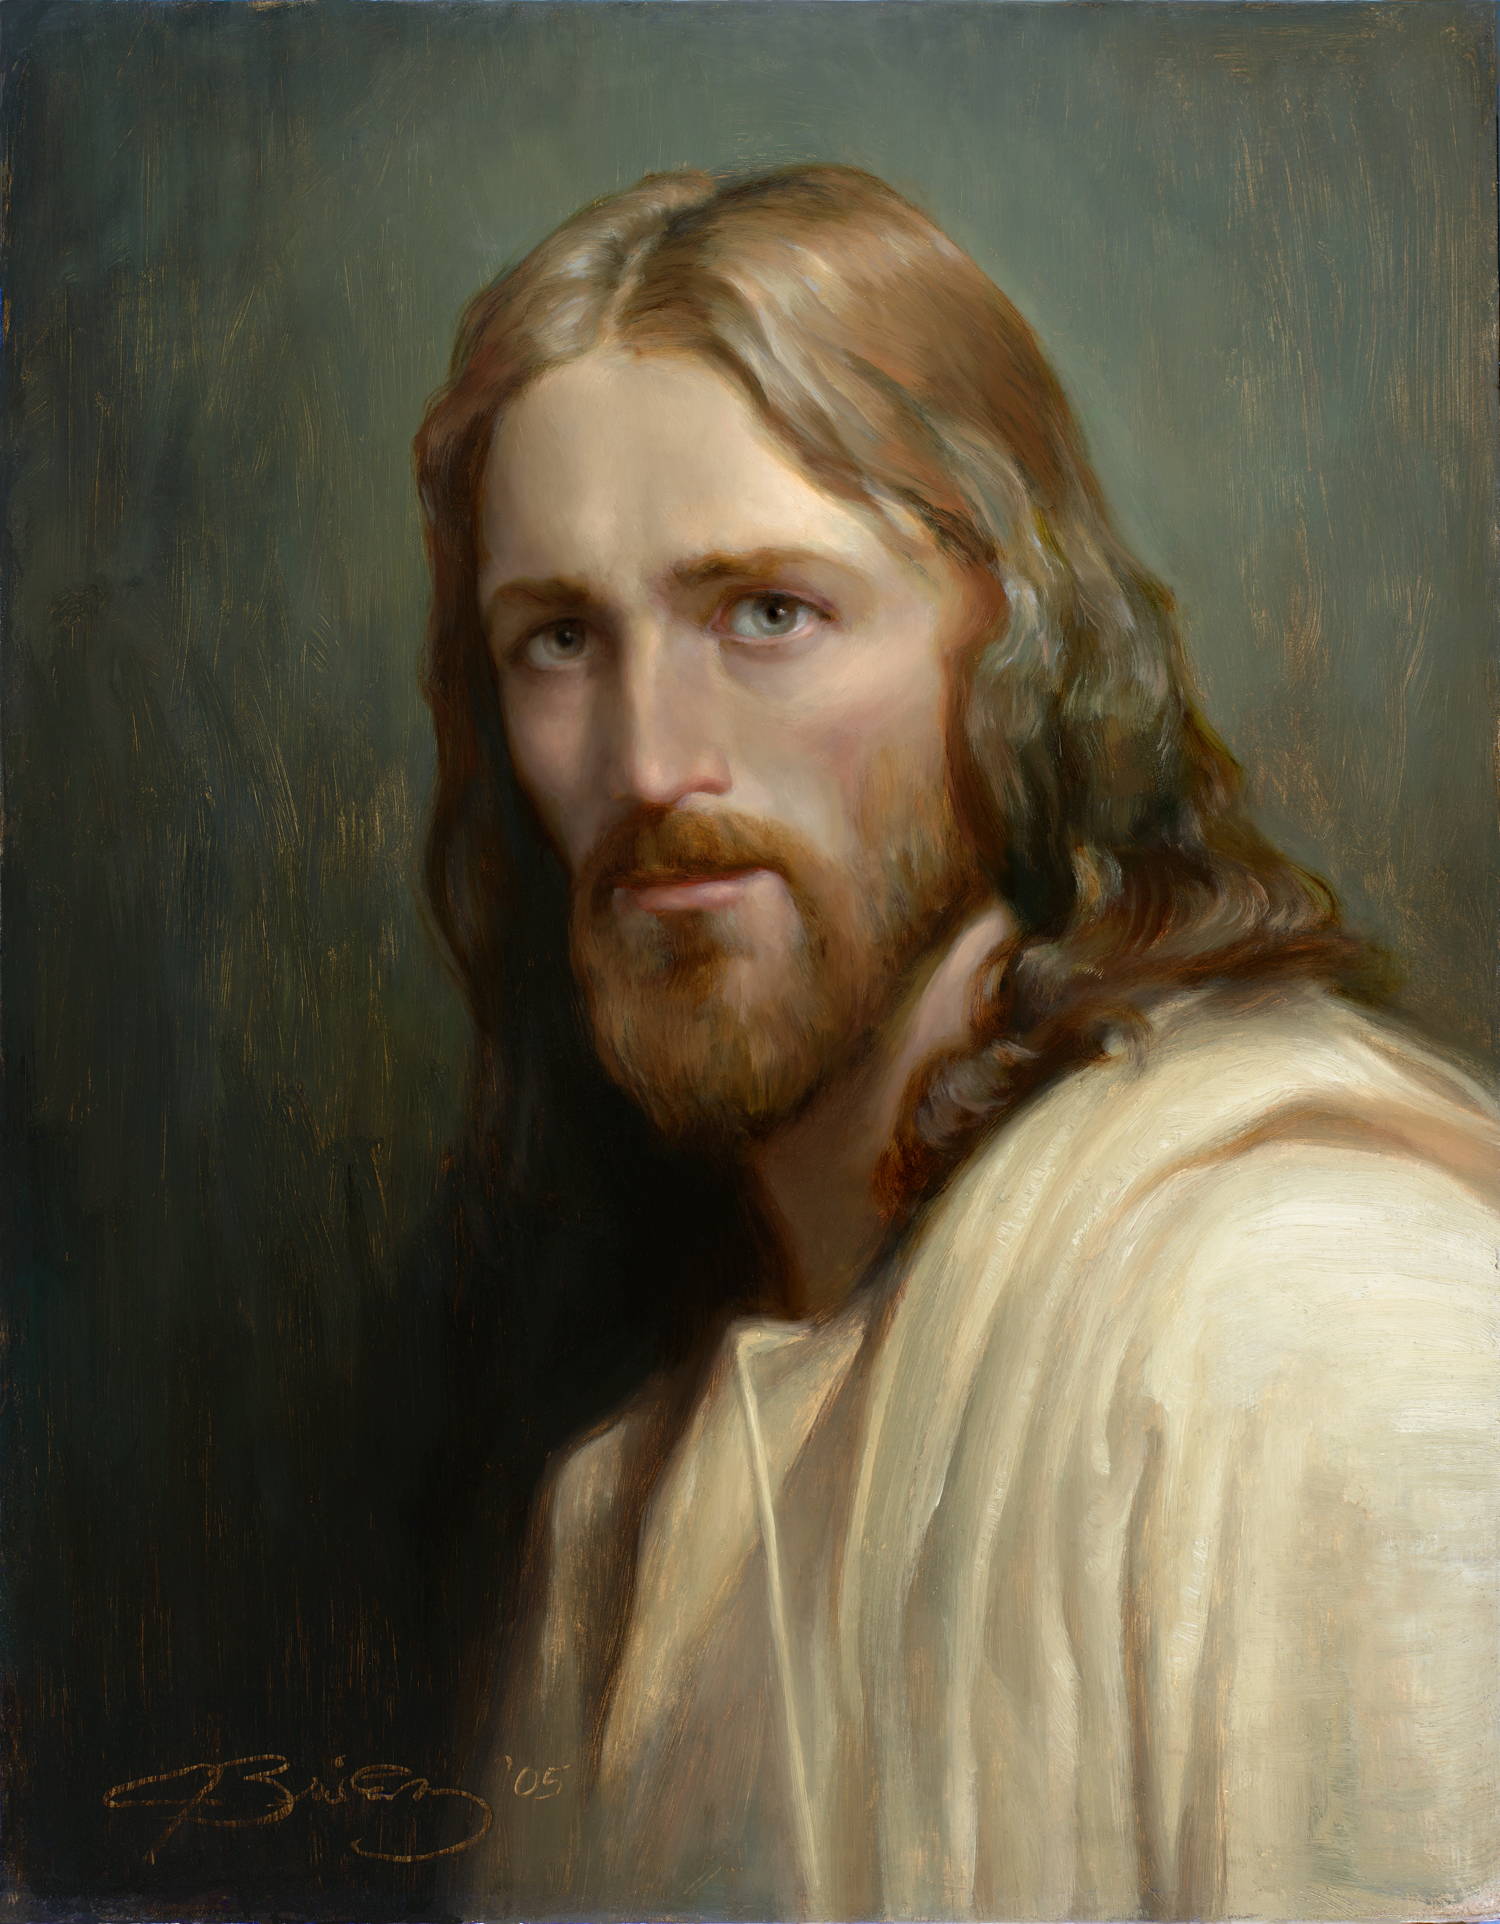 Classic style portrait of Jesus Christ.